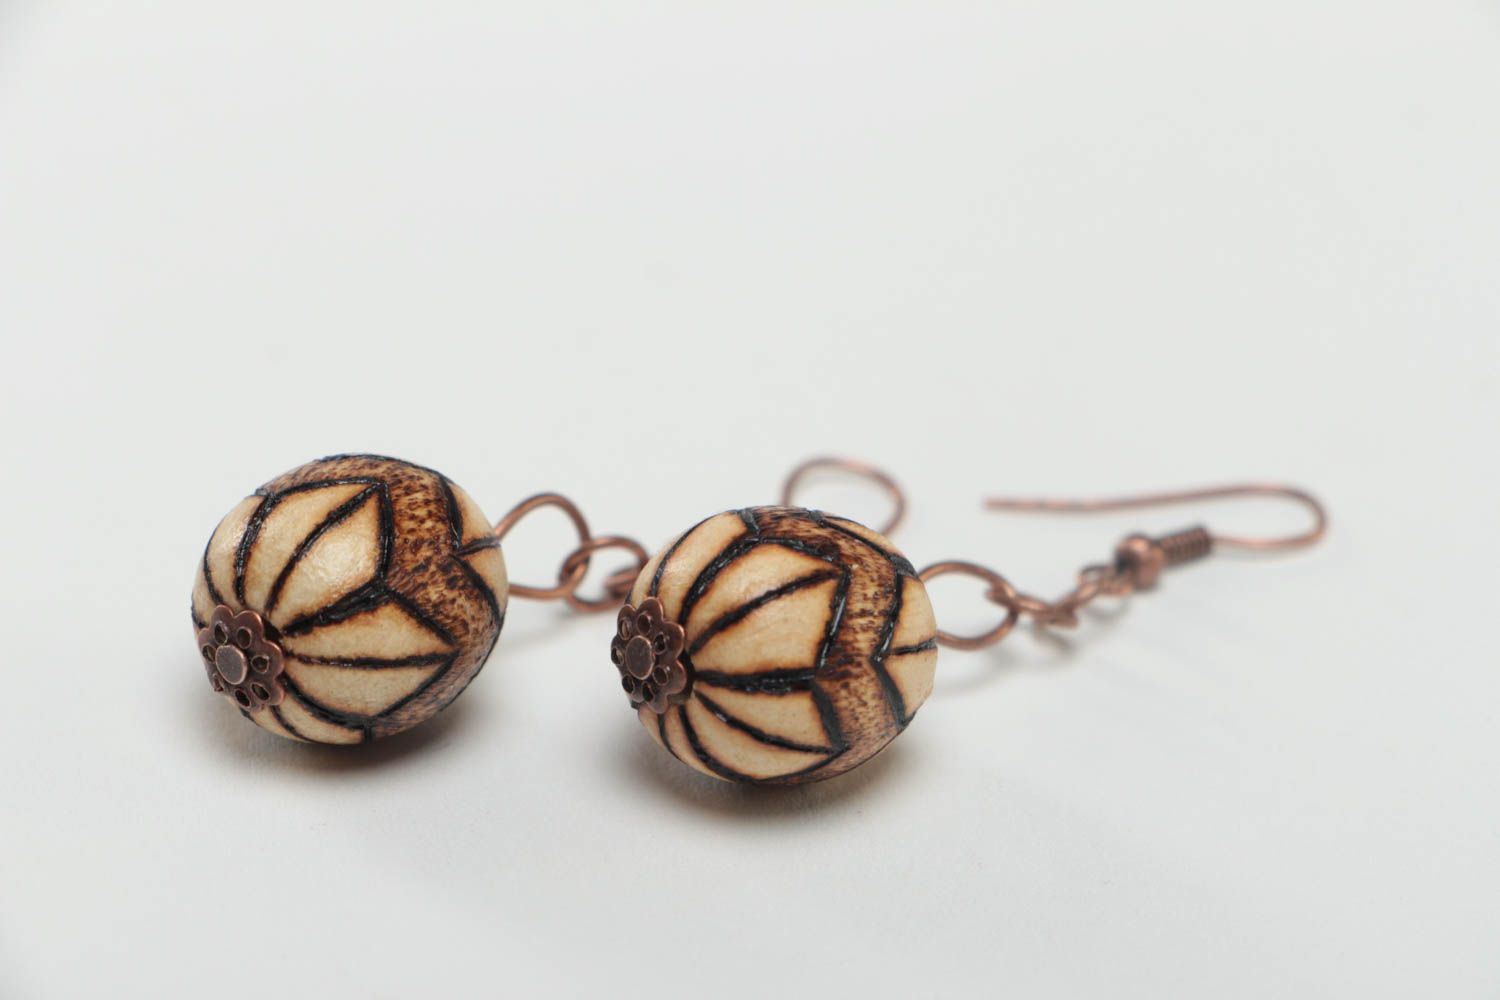 Handmade earrings wooden jewelry earrings for women fashion jewelry gift for her photo 3